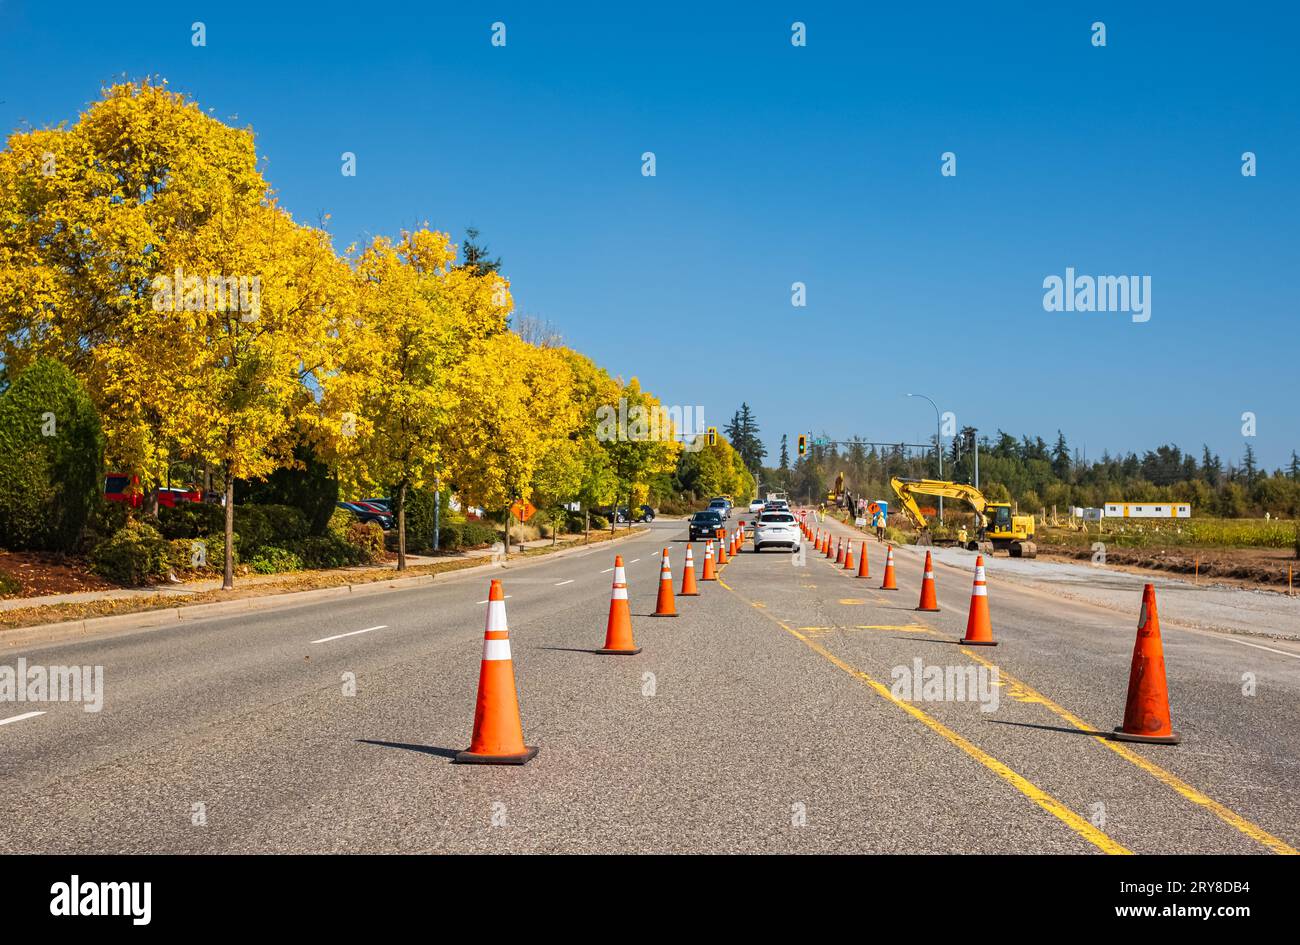 Orange cones set up to direct traffic. Construction site is repairing asphalt road pavement,road construction workers and road construction machinery. Stock Photo